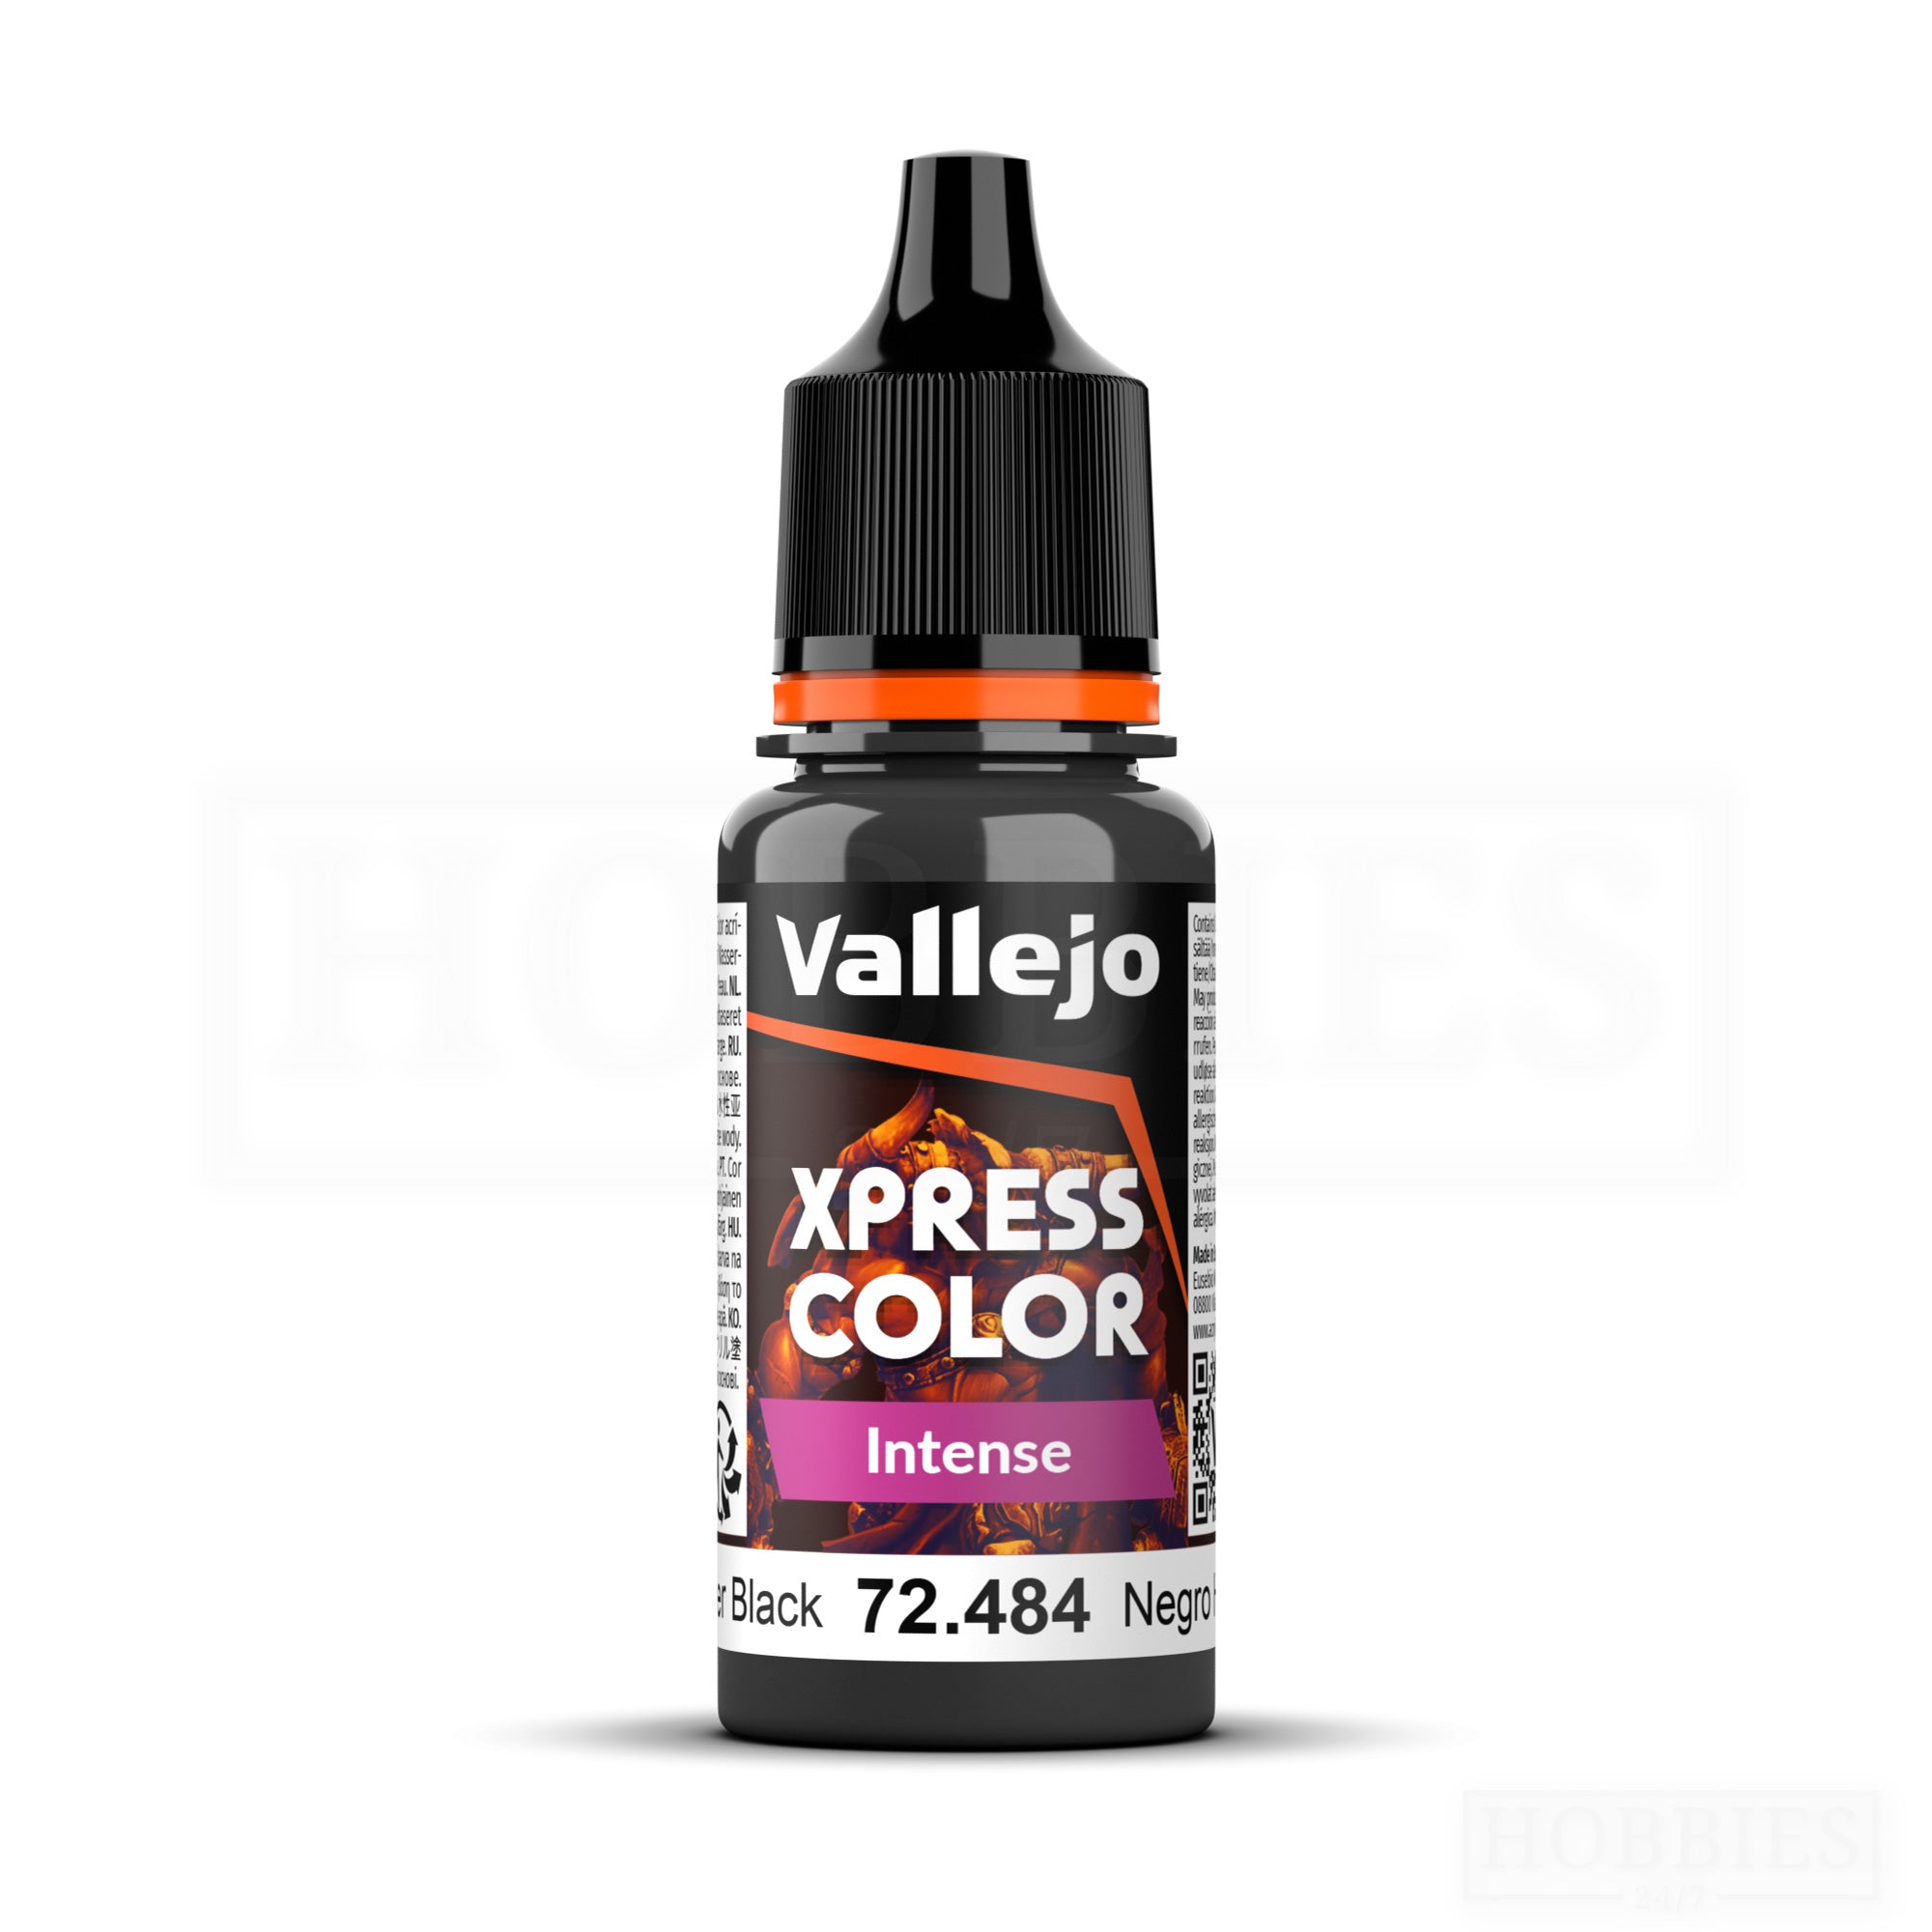 Vallejo Xpress Color Intense Hospitallier Black 18ml